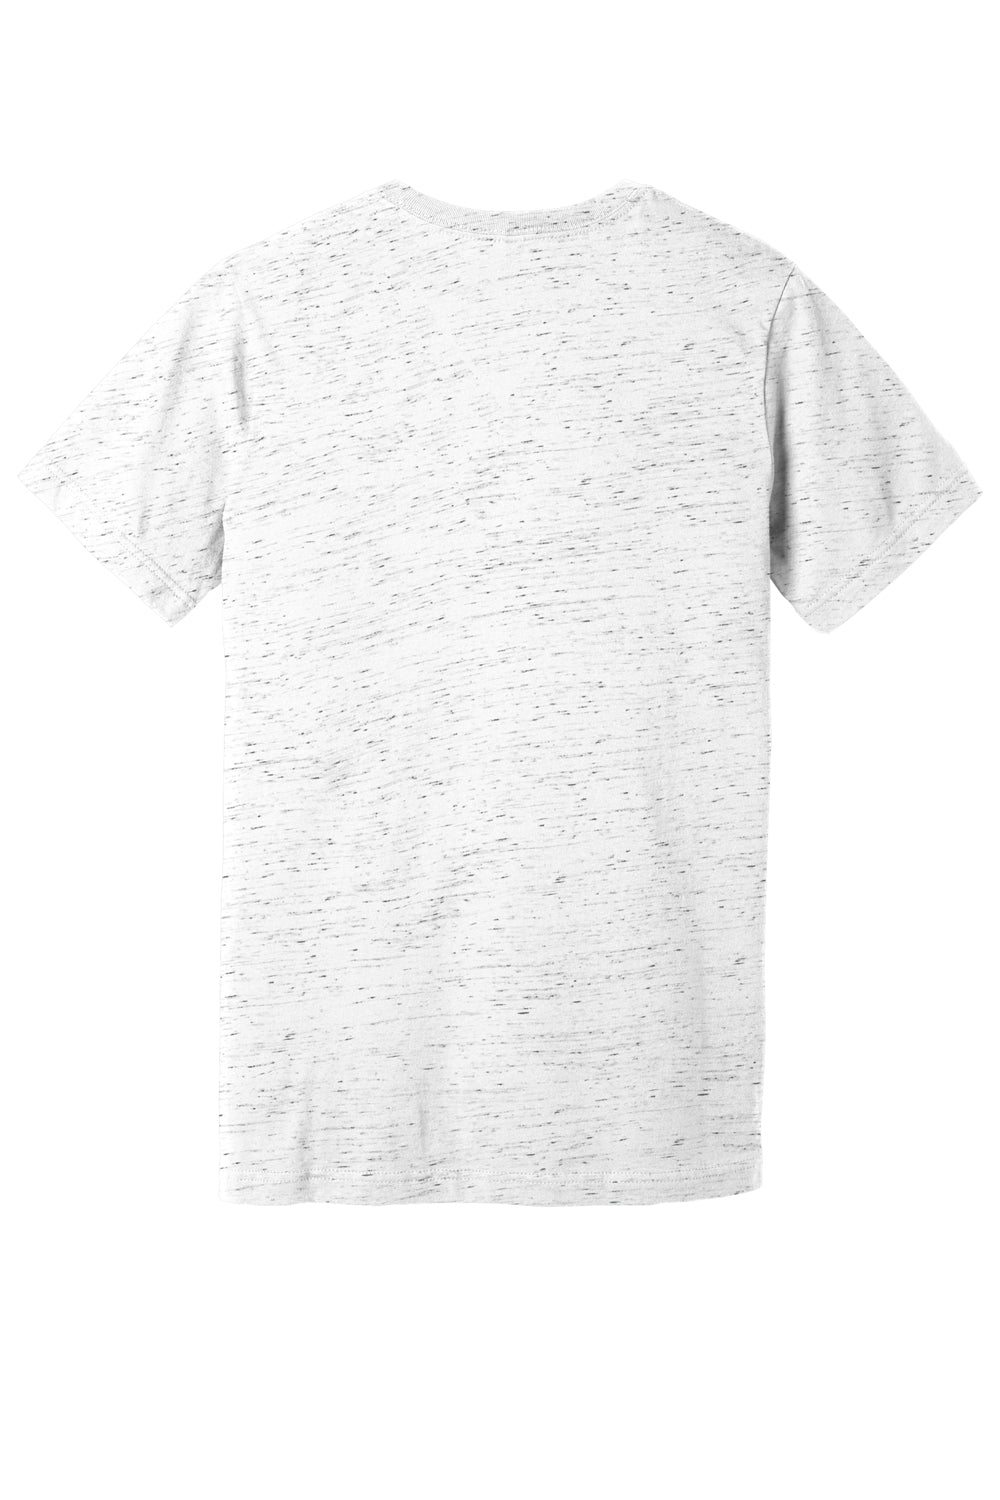 Bella + Canvas BC3655/3655C Mens Textured Jersey Short Sleeve V-Neck T-Shirt White Marble  Flat Back